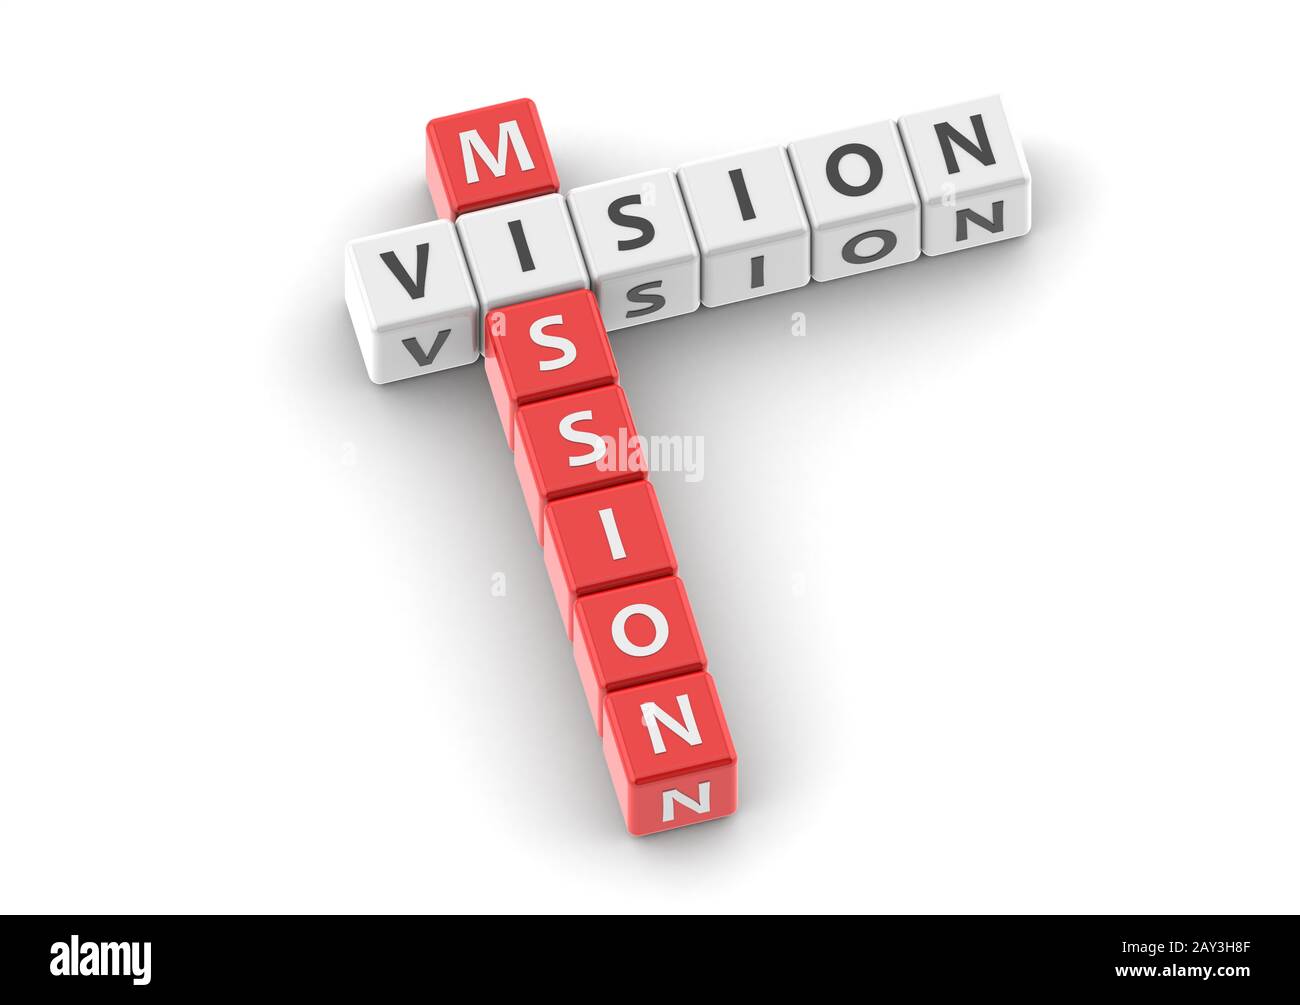 Mission Vision Stockfoto